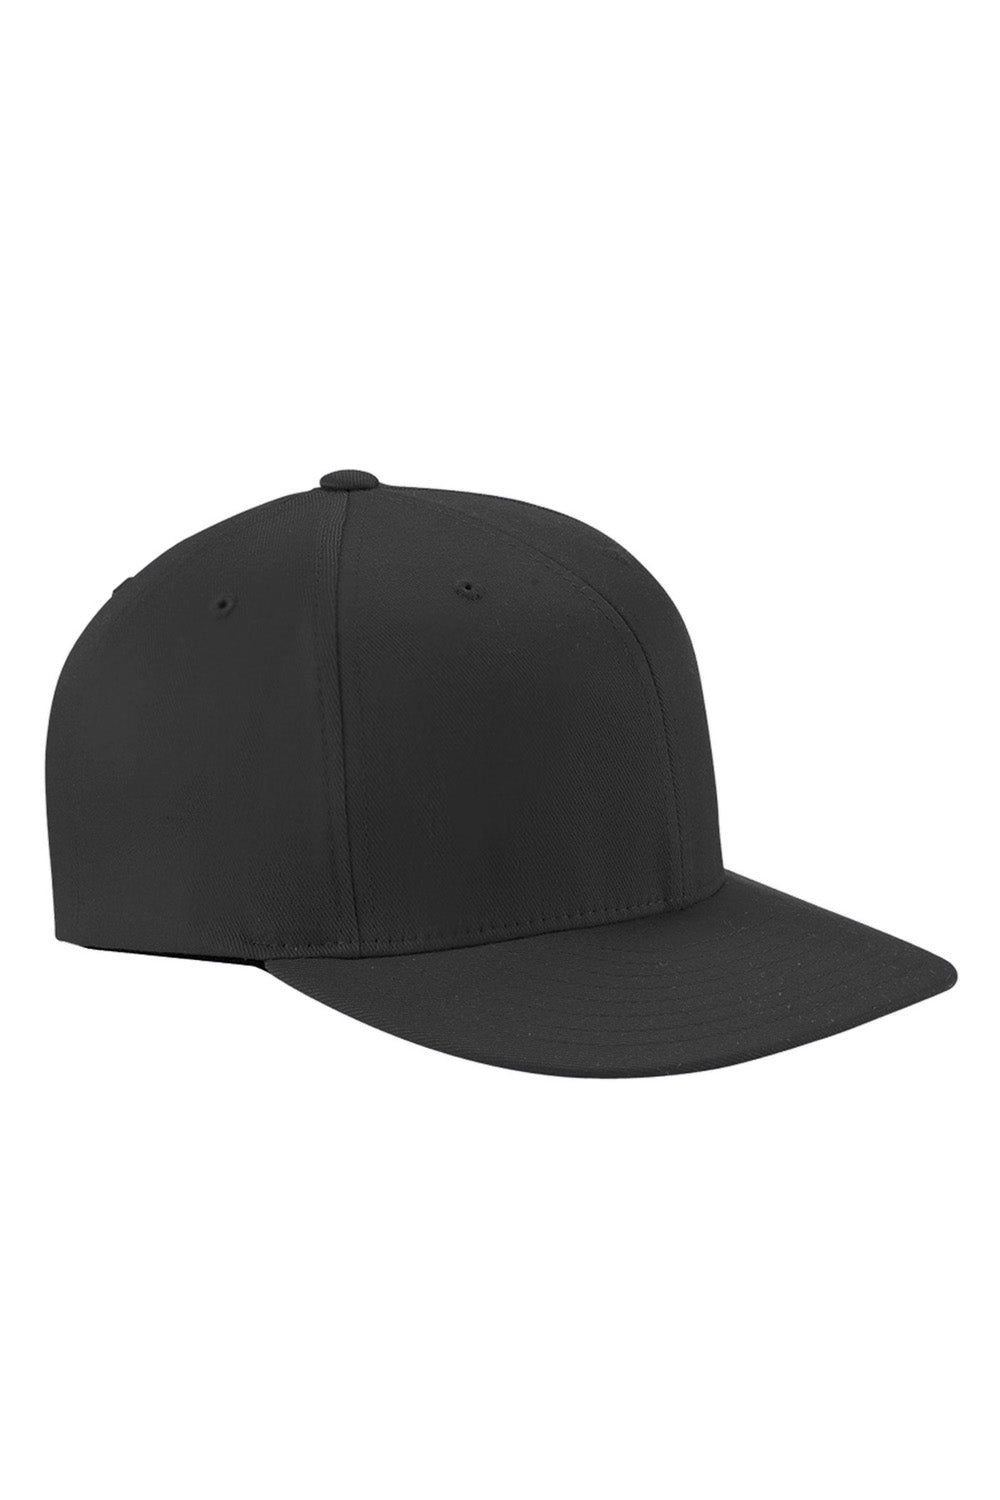 Flexfit 6297F Mens Stretch Fit Hat Black Front